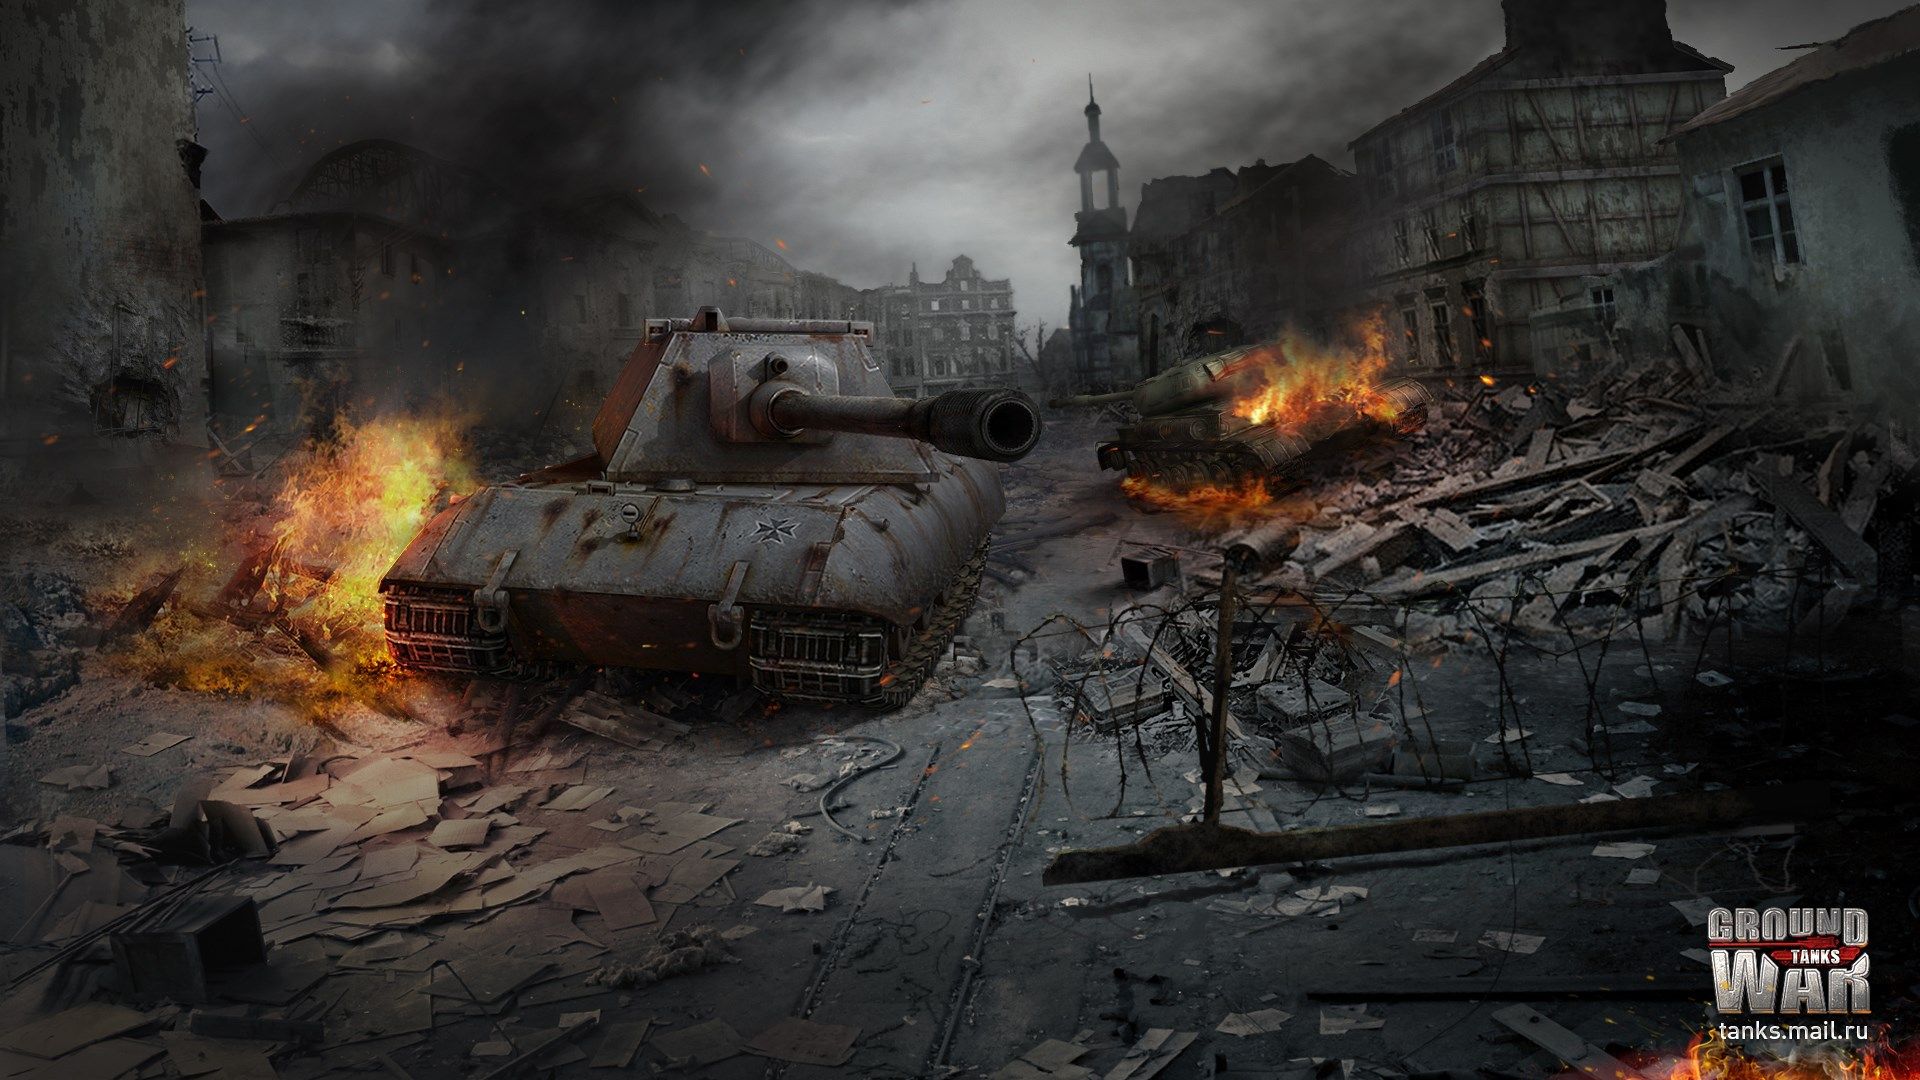 Ground War: Tanks wallpaper HD wallpaper, Background